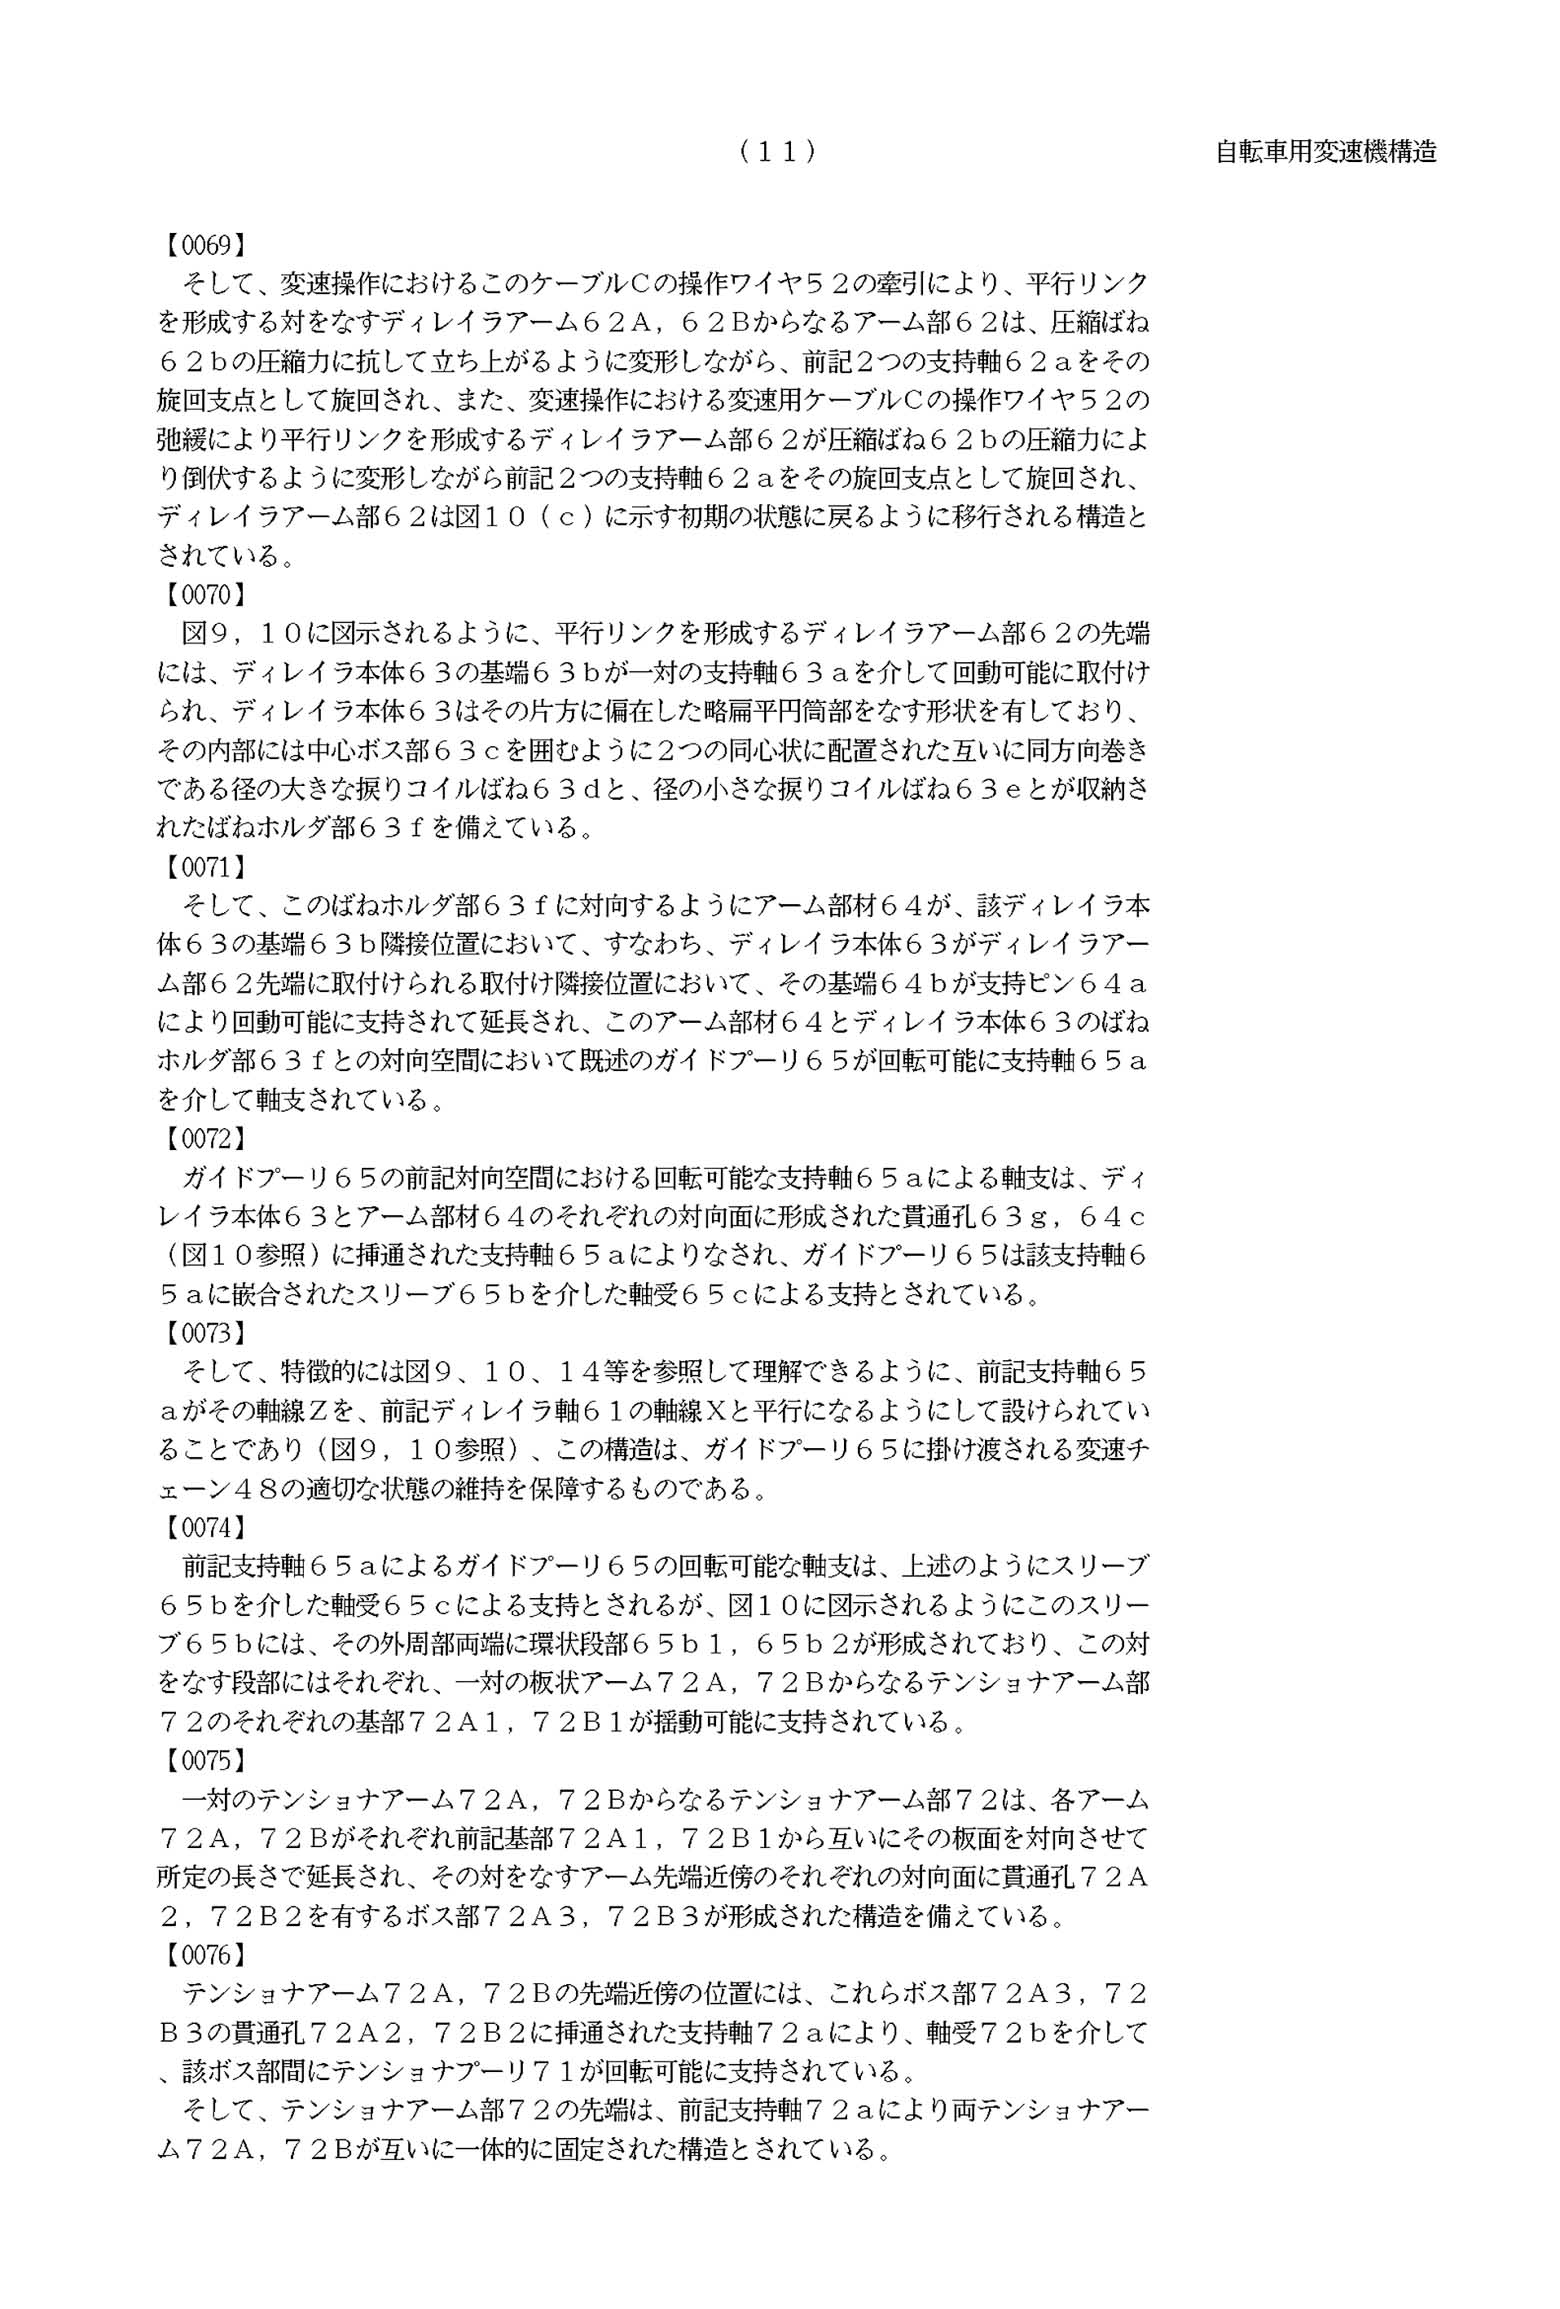 Japanese Patent 4413657 - Honda page 11 main image